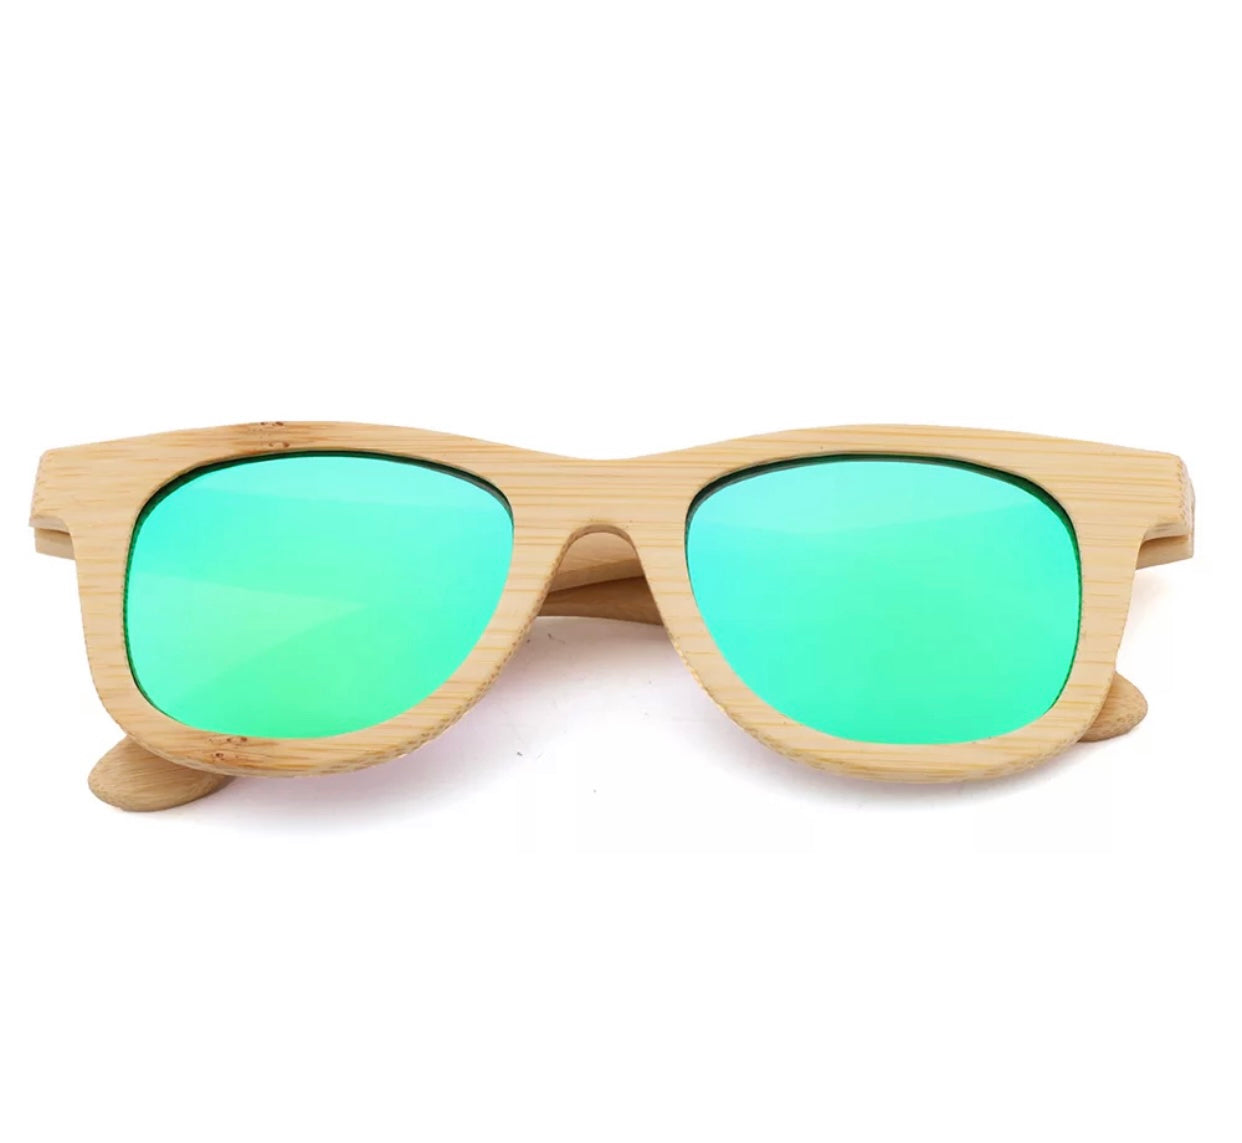 JAXON Eco-friendly Polarized Bamboo Sunglasses for Kids (includes